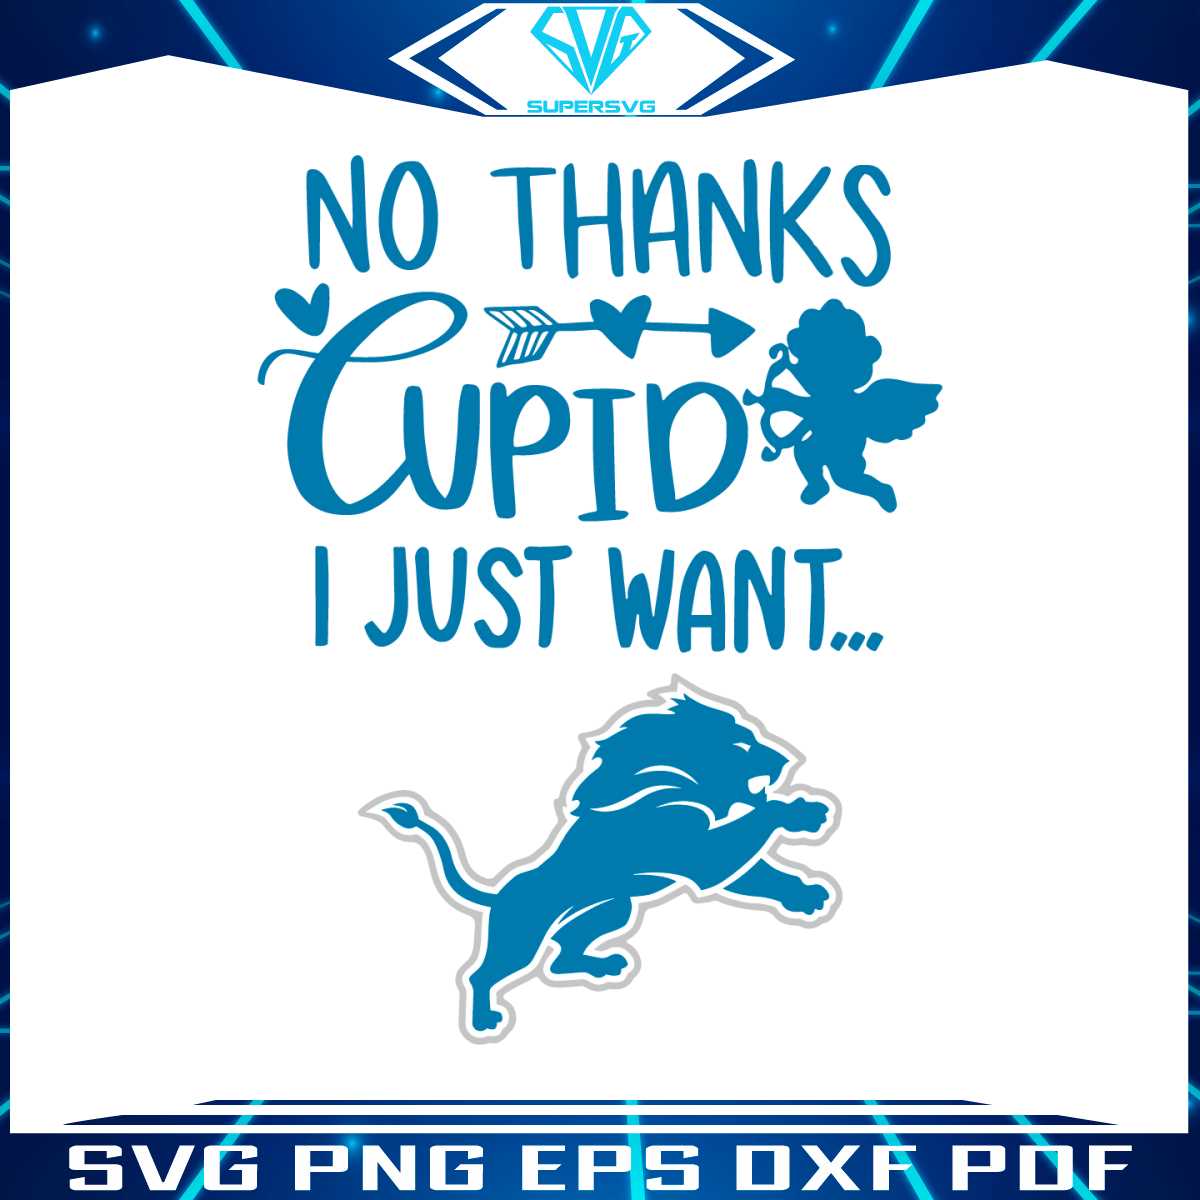 no-thanks-cupid-i-just-want-detroit-lions-svg